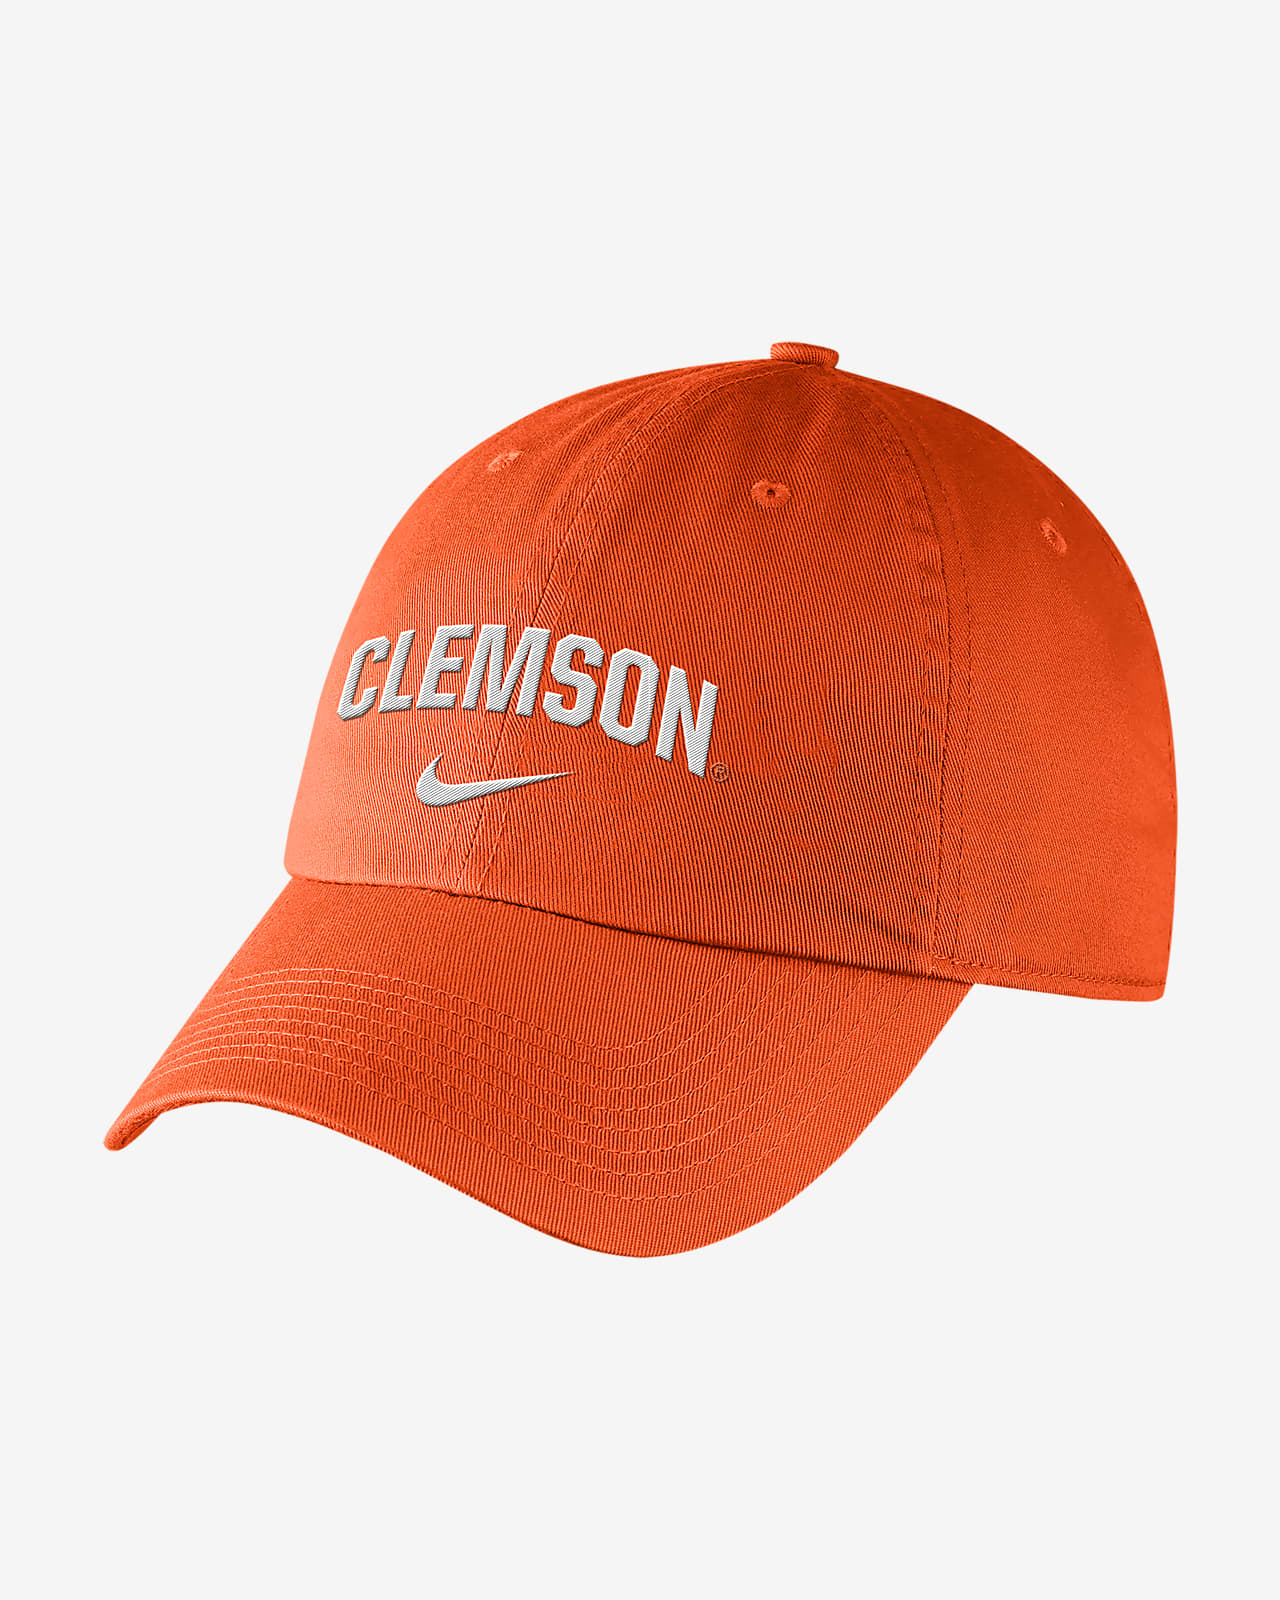 Nike College (Clemson) Hat